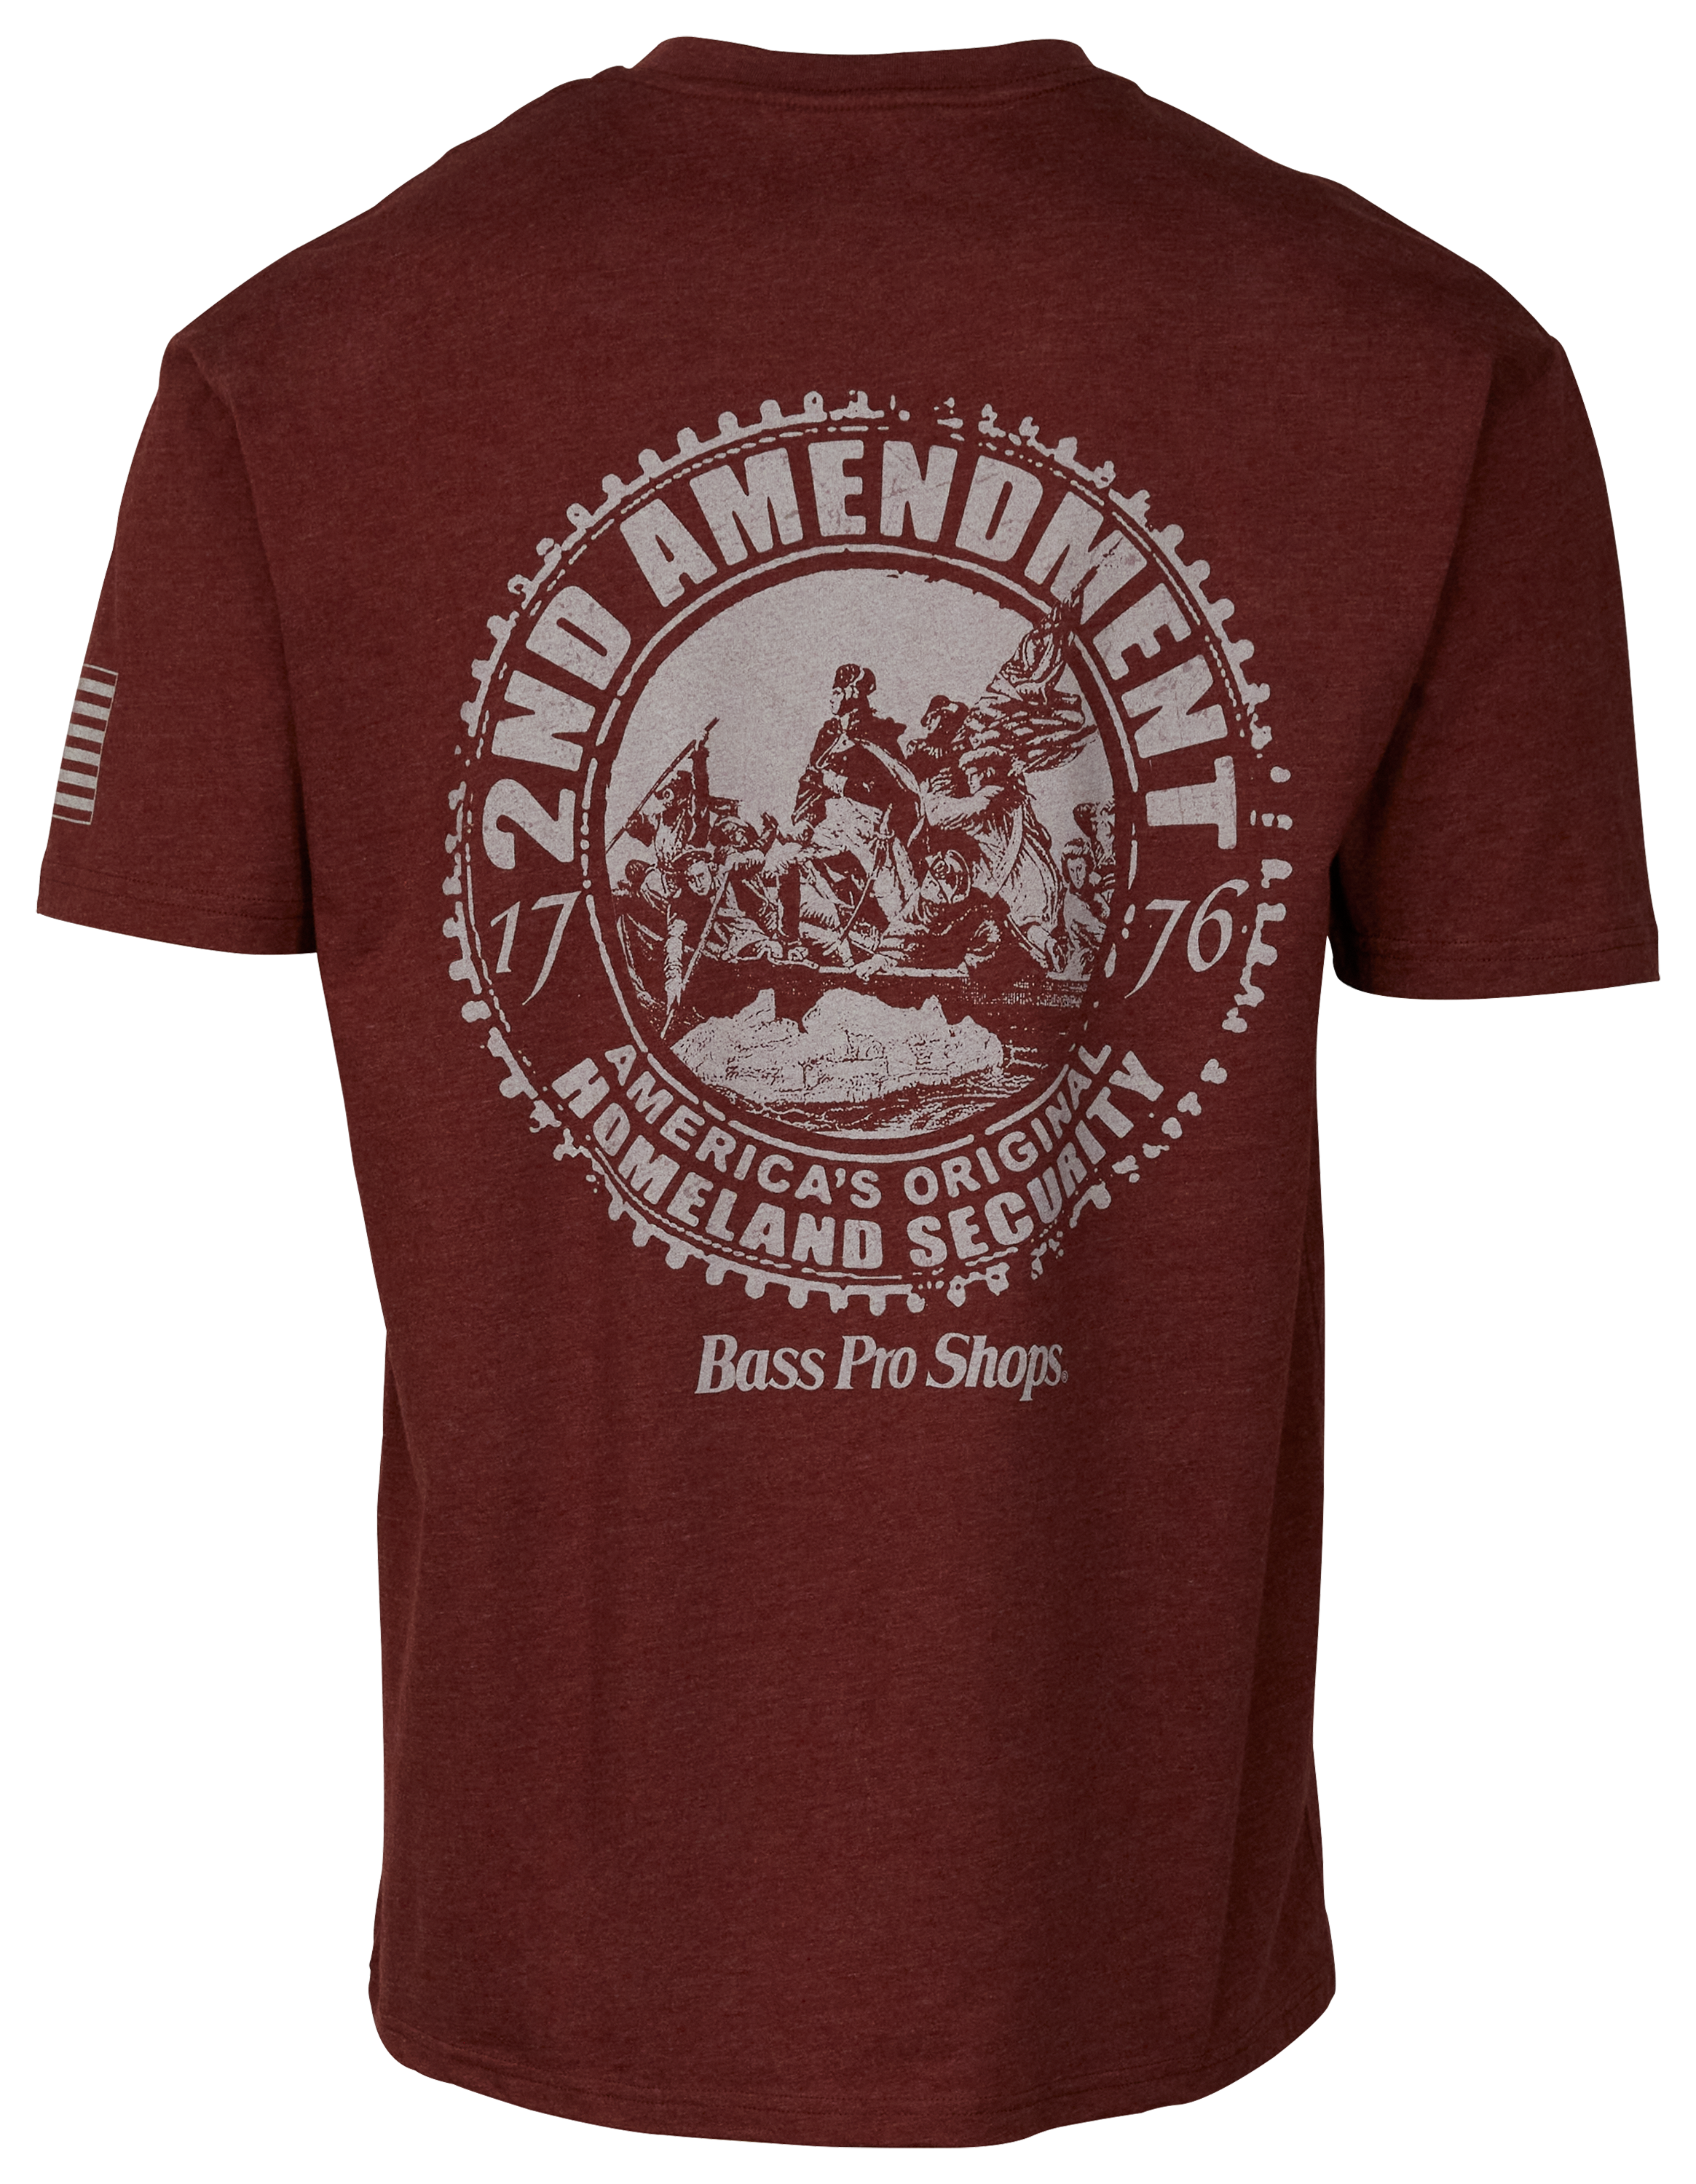 Bass Pro Shops Homeland Security Short-Sleeve T-Shirt for Men - Maroon Heather - 3XL